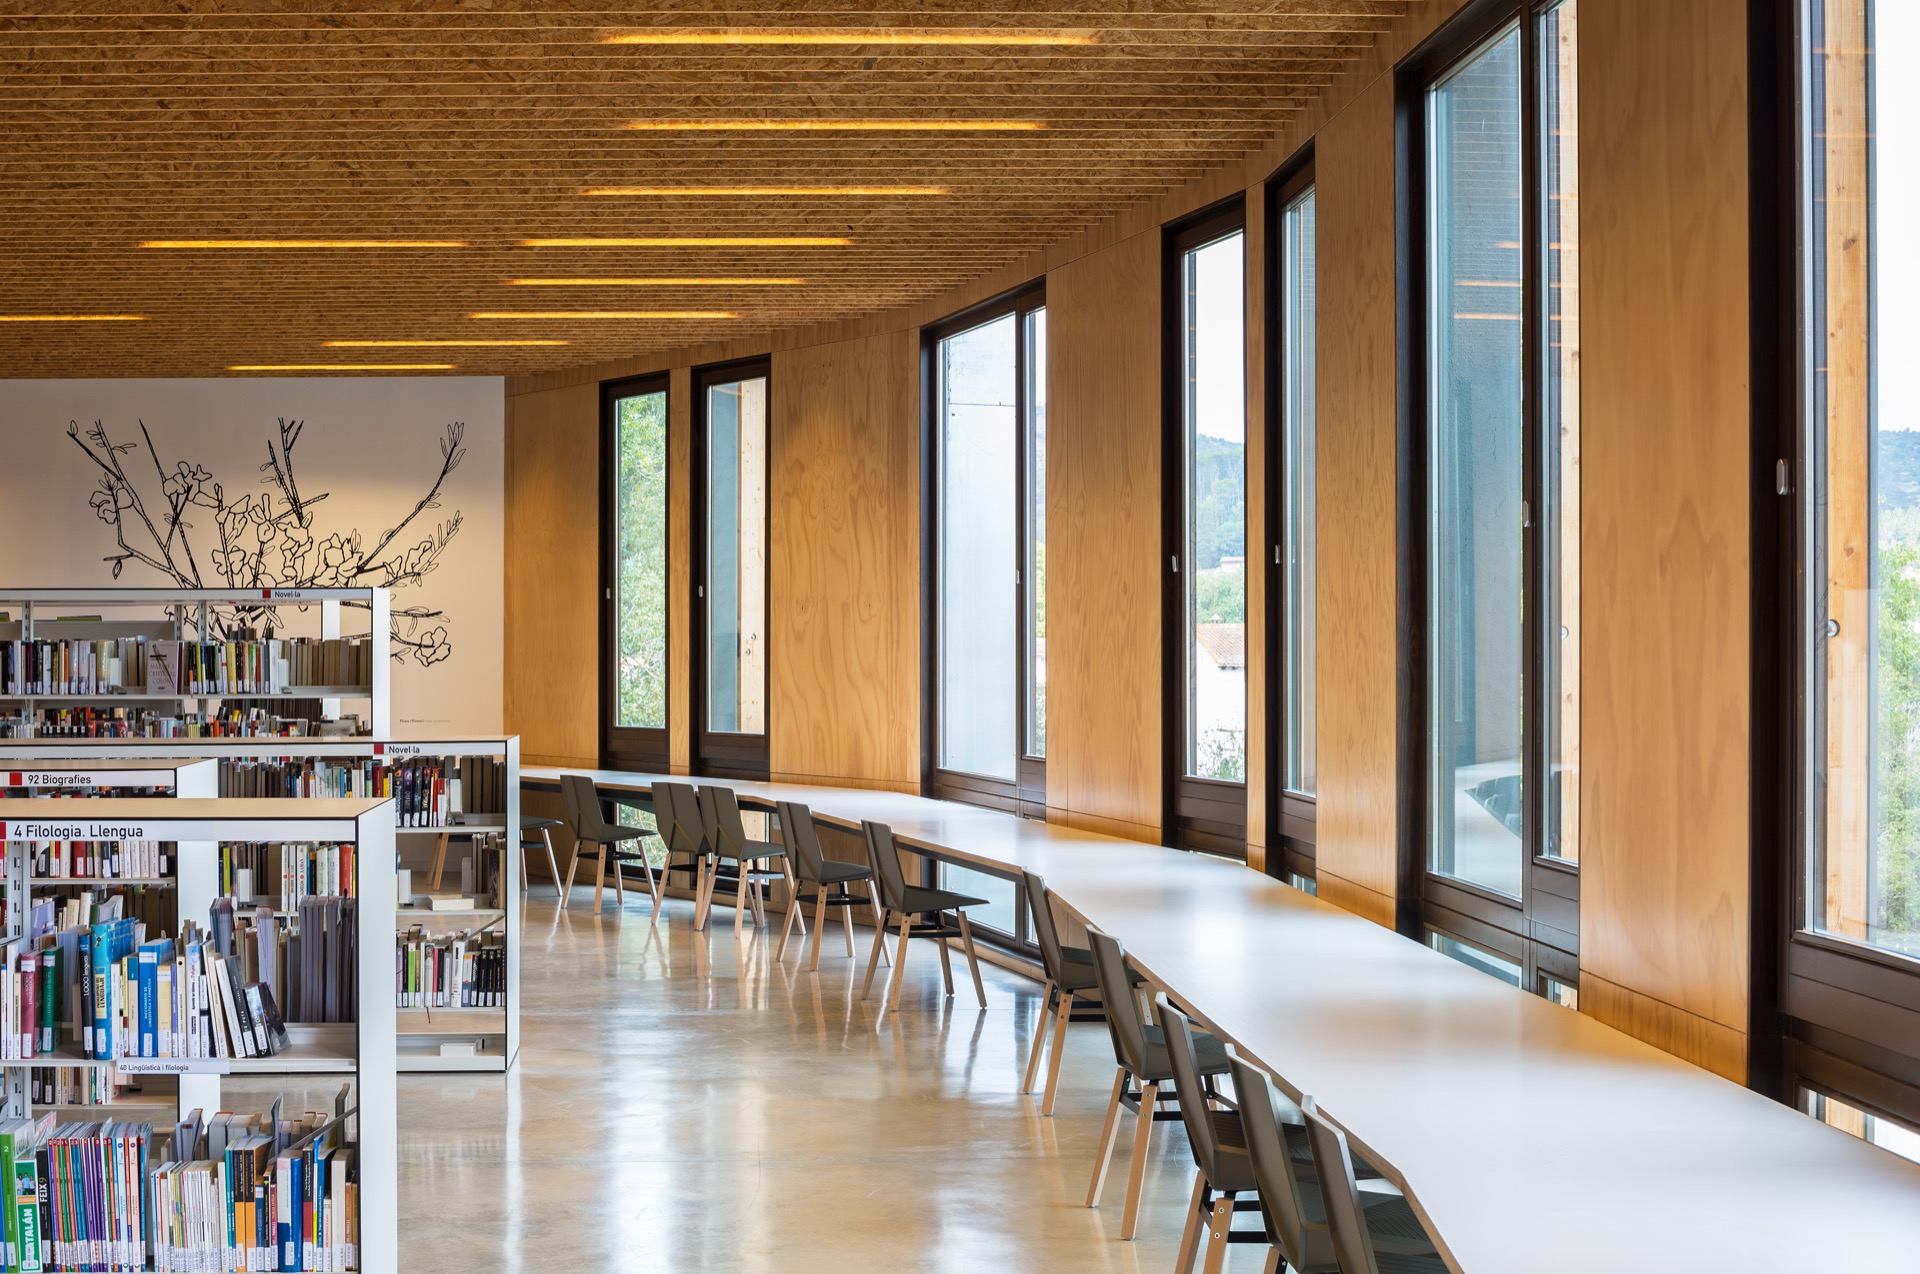 La Ginesta Begues library building architecture design interior view